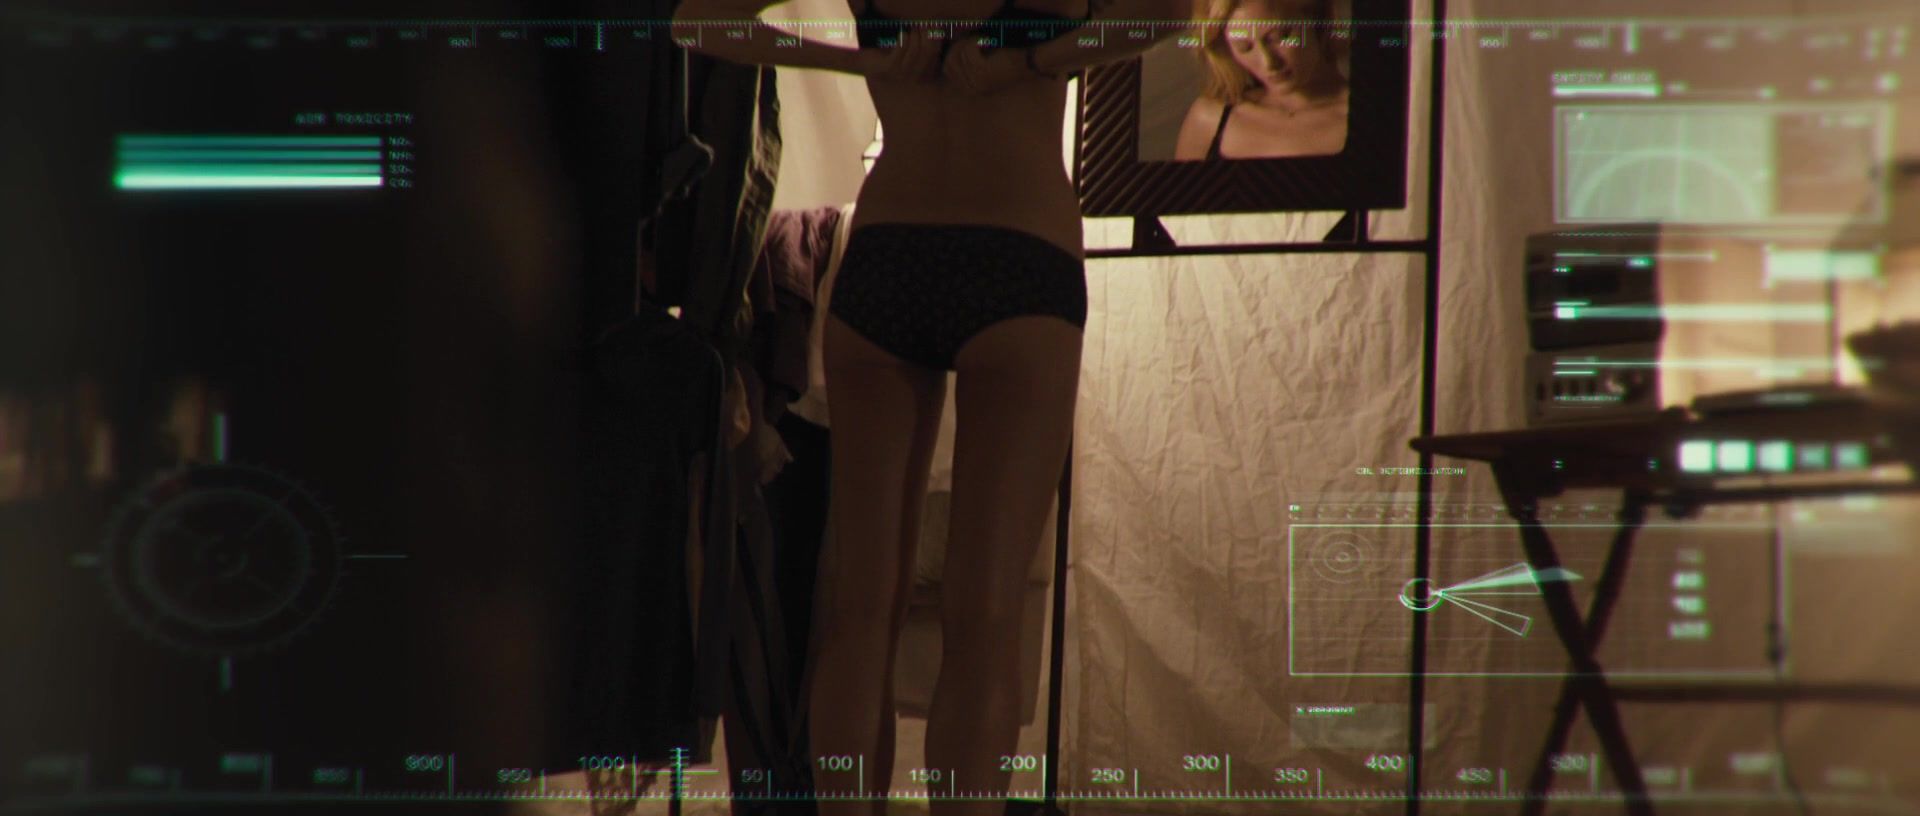 JockerTube Hot actress Ashley Hinshaw from movie The Pyramid (2014) Black Thugs